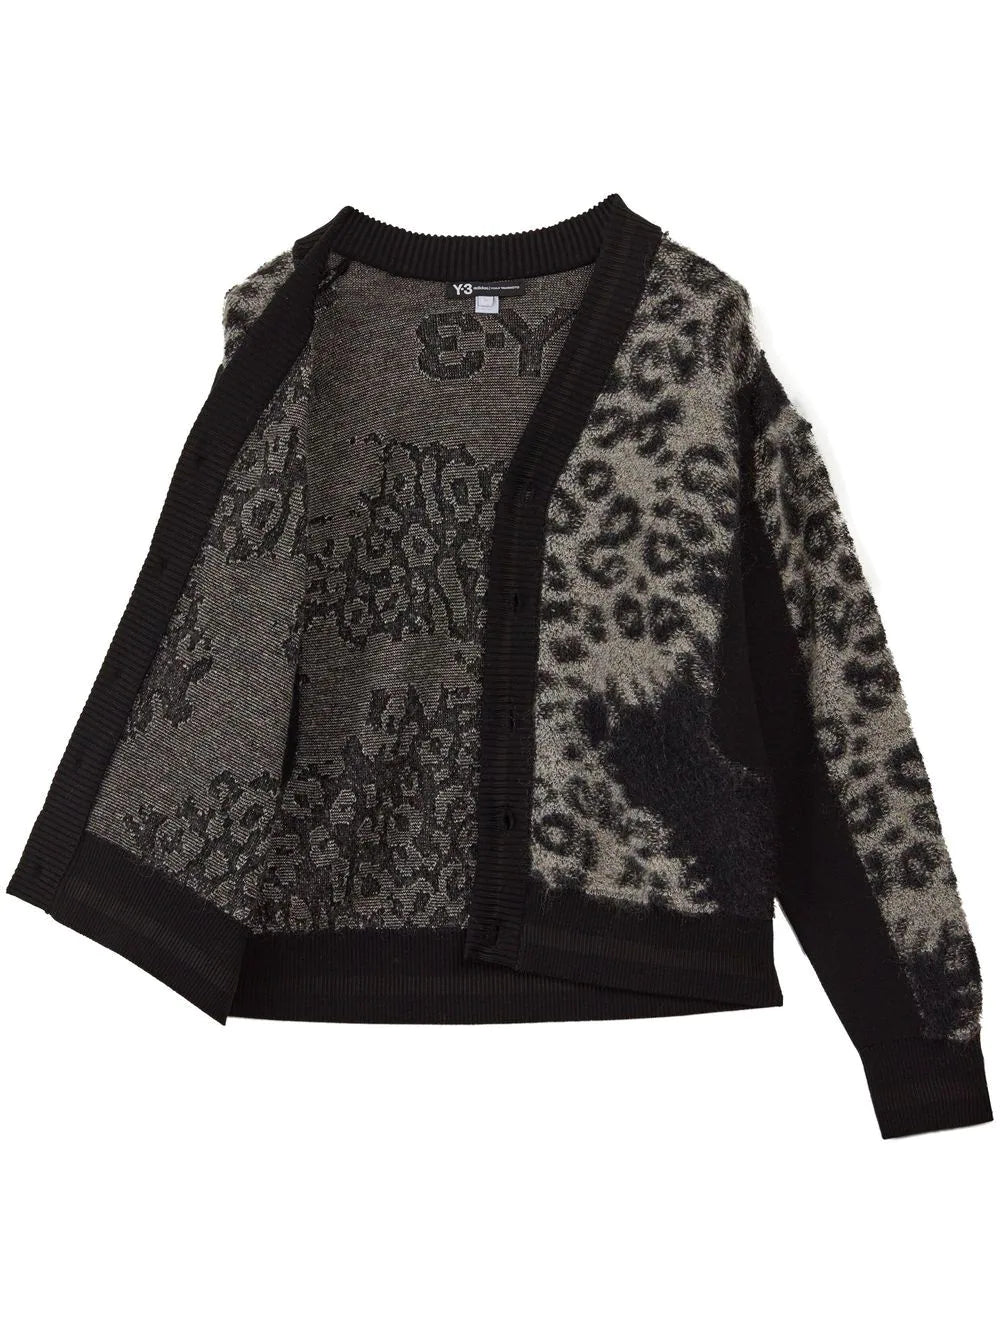 Y-3 | Leopard Knit Cardigan in Black/Leo | Henrik Vibskov Boutique